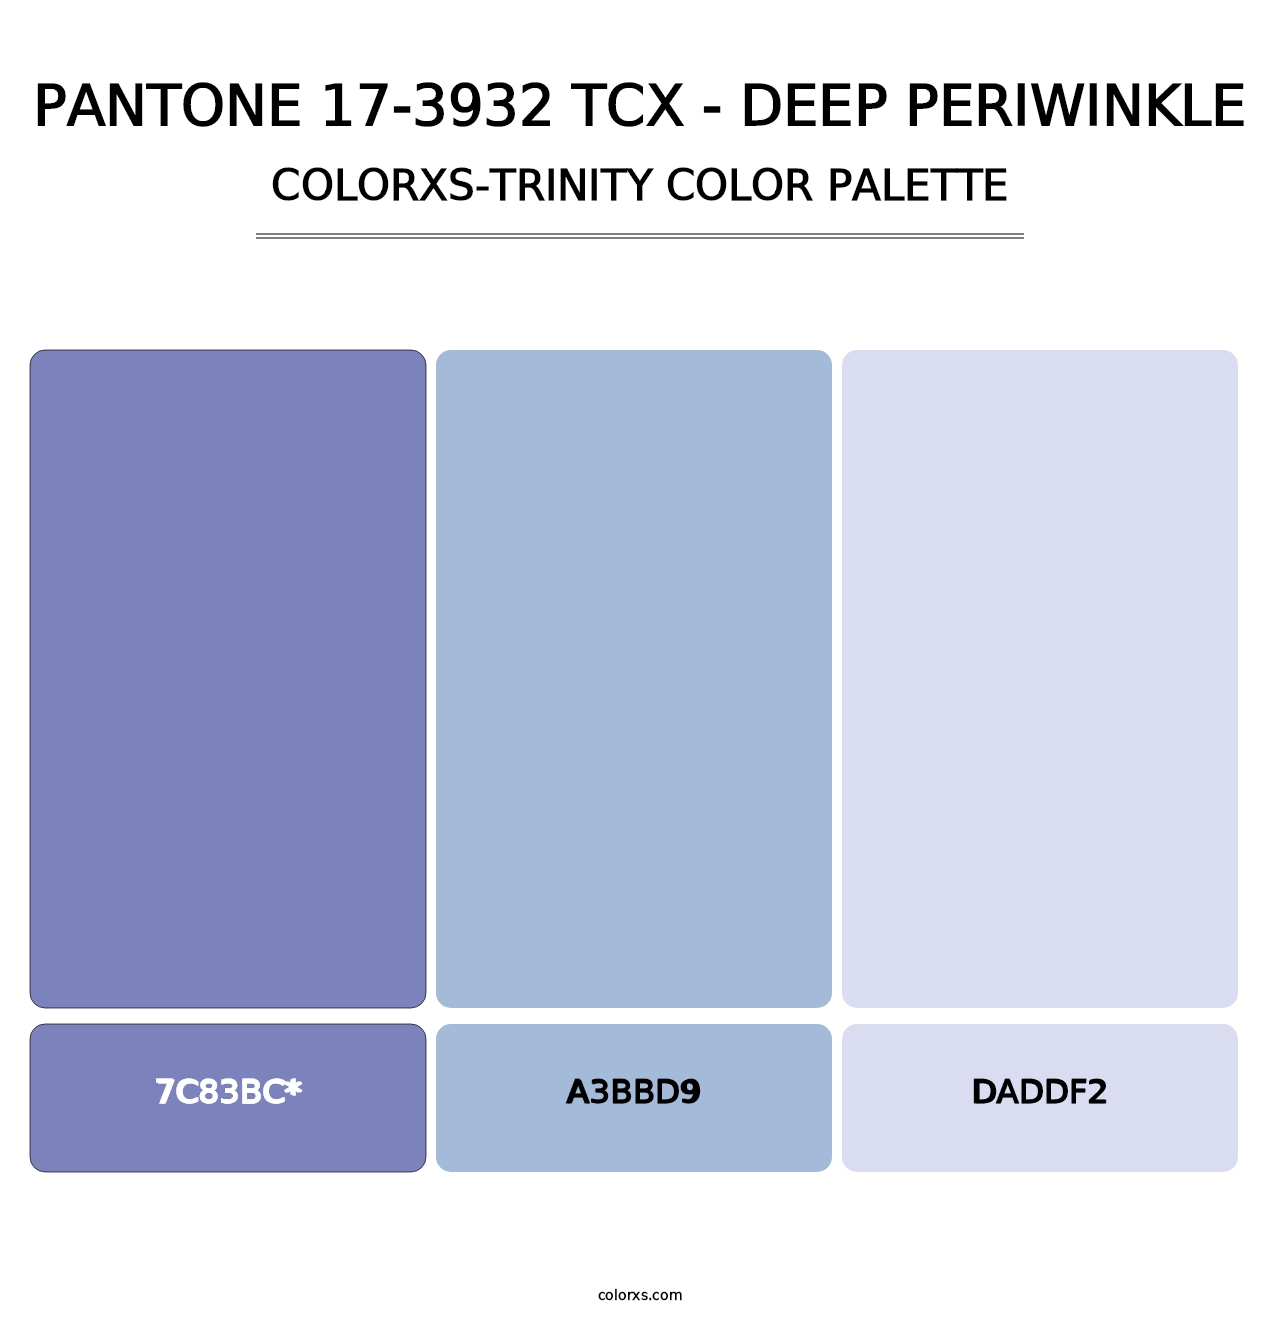 PANTONE 17-3932 TCX - Deep Periwinkle - Colorxs Trinity Palette